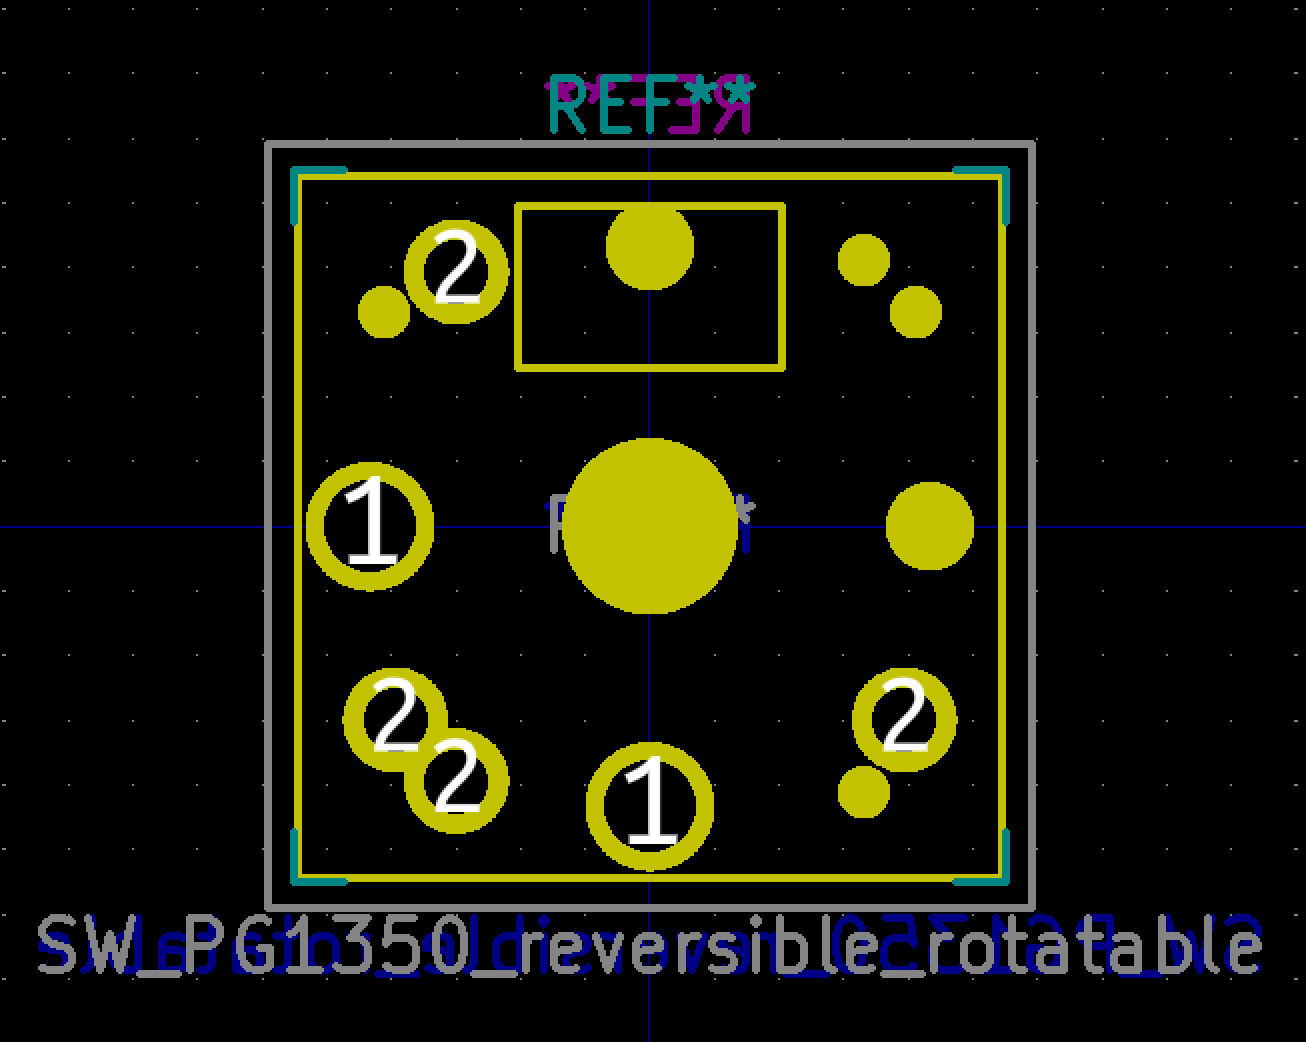 PG1350, reversible & rotatable